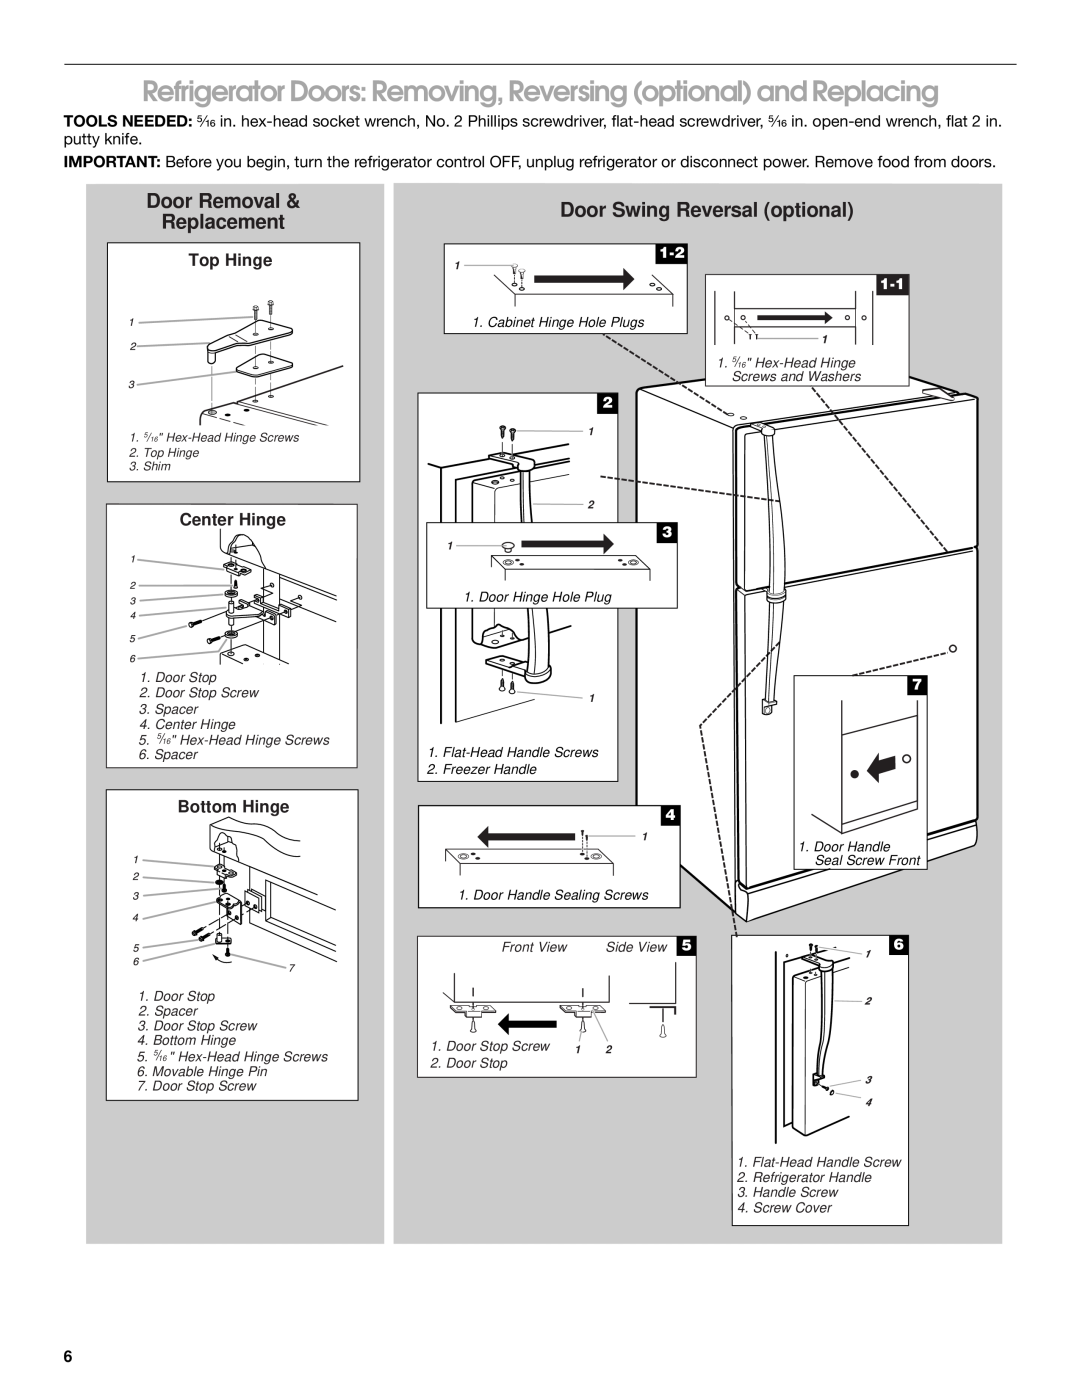 Crosley 2209920 manual Refrigerator Doors Removing, Reversing optional and Replacing, Door Removal Replacement, Top Hinge 